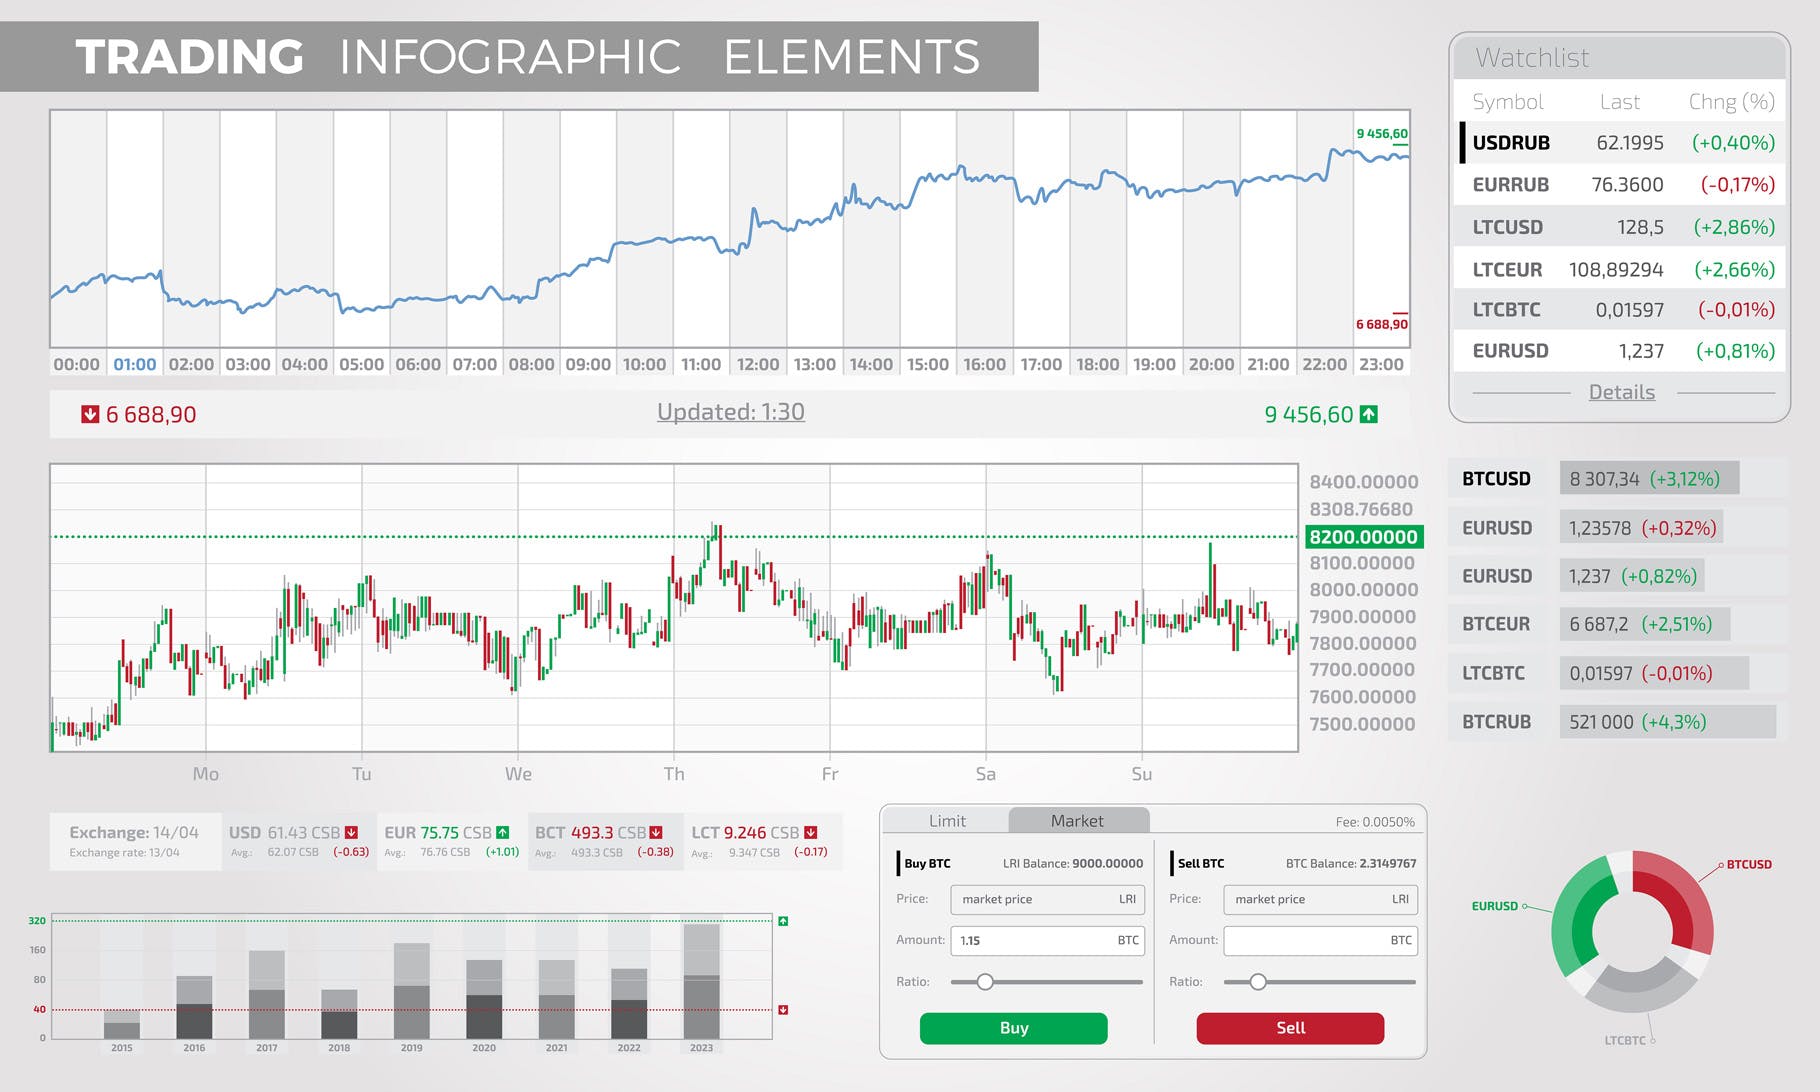 股票交易行情可视化数据图表设计模板 Trading Infographic Elements插图(2)